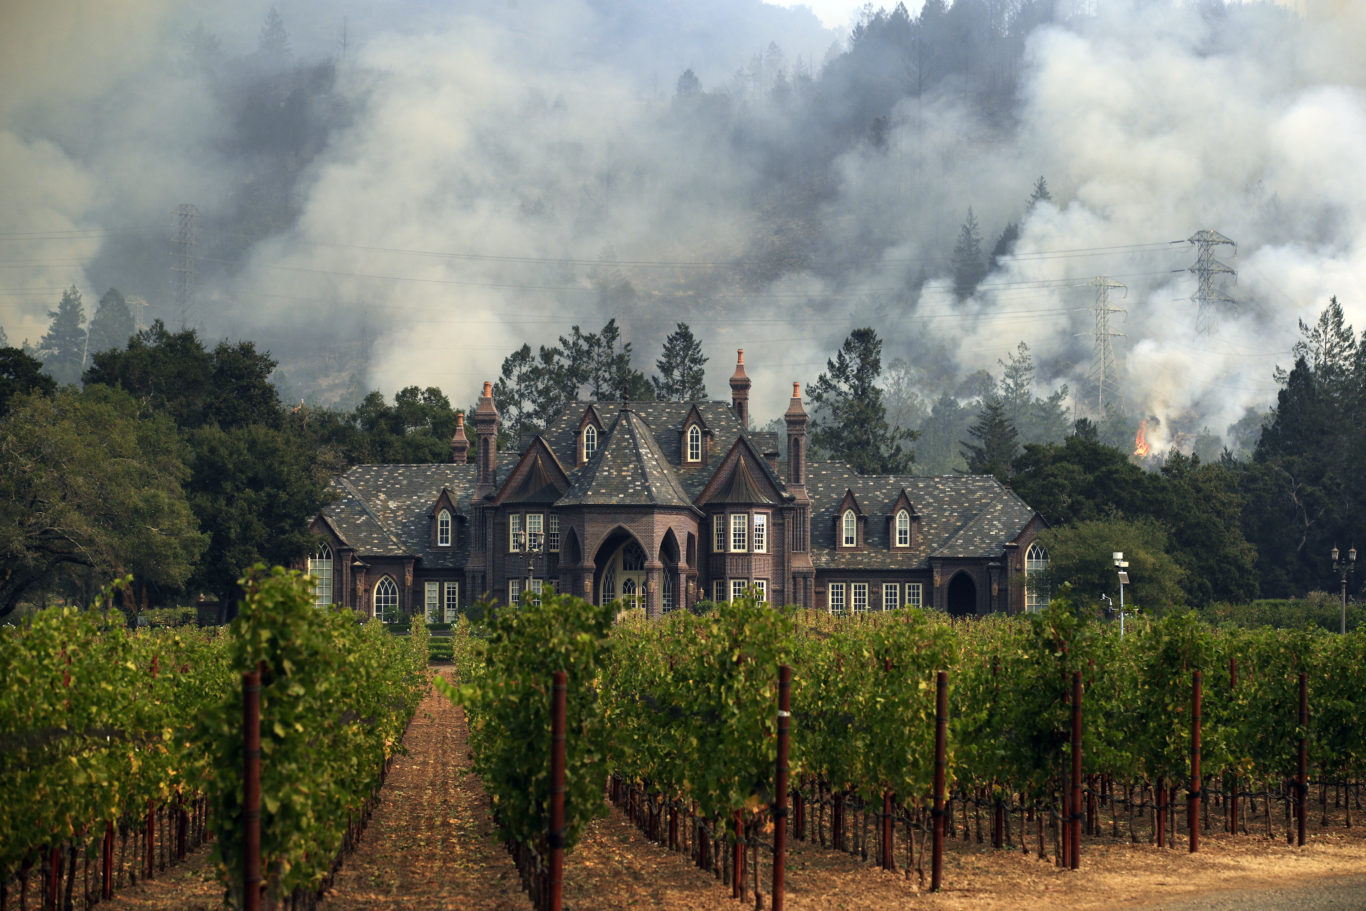 A wildfire burns behind a winery in Santa Rosa, California (Jae C Hong/AP)